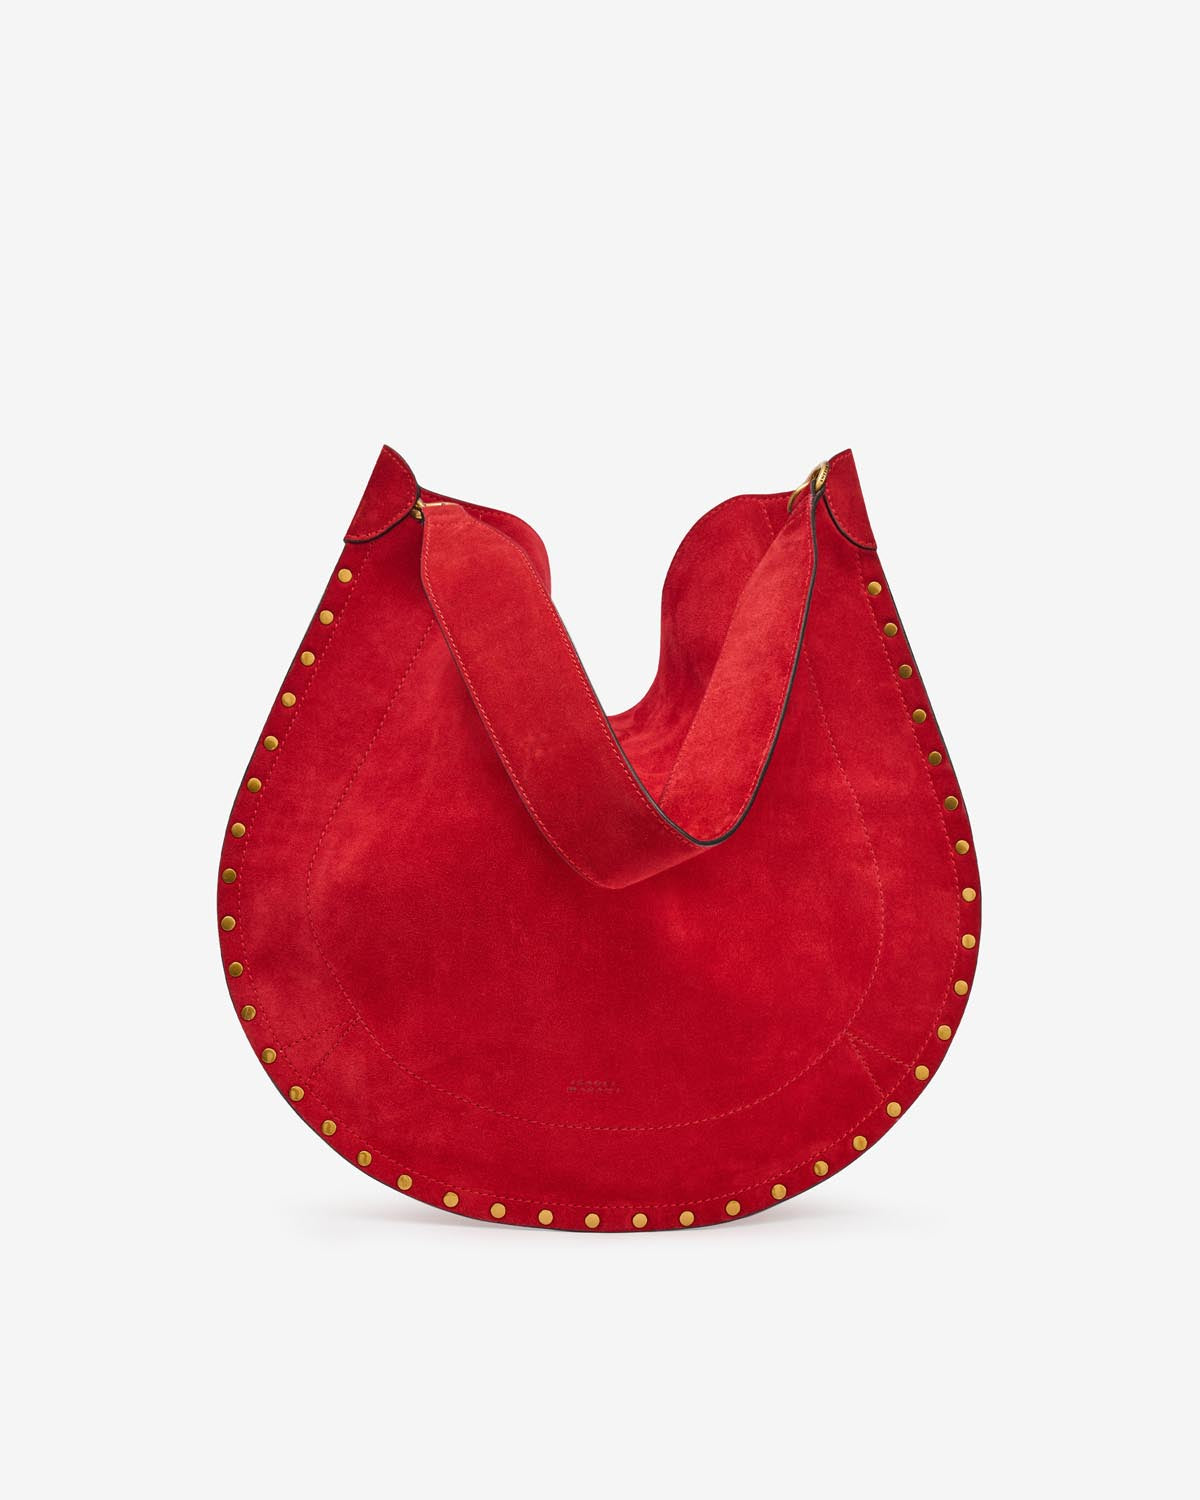 Oskan hobo soft bag Woman Scarlet red 5